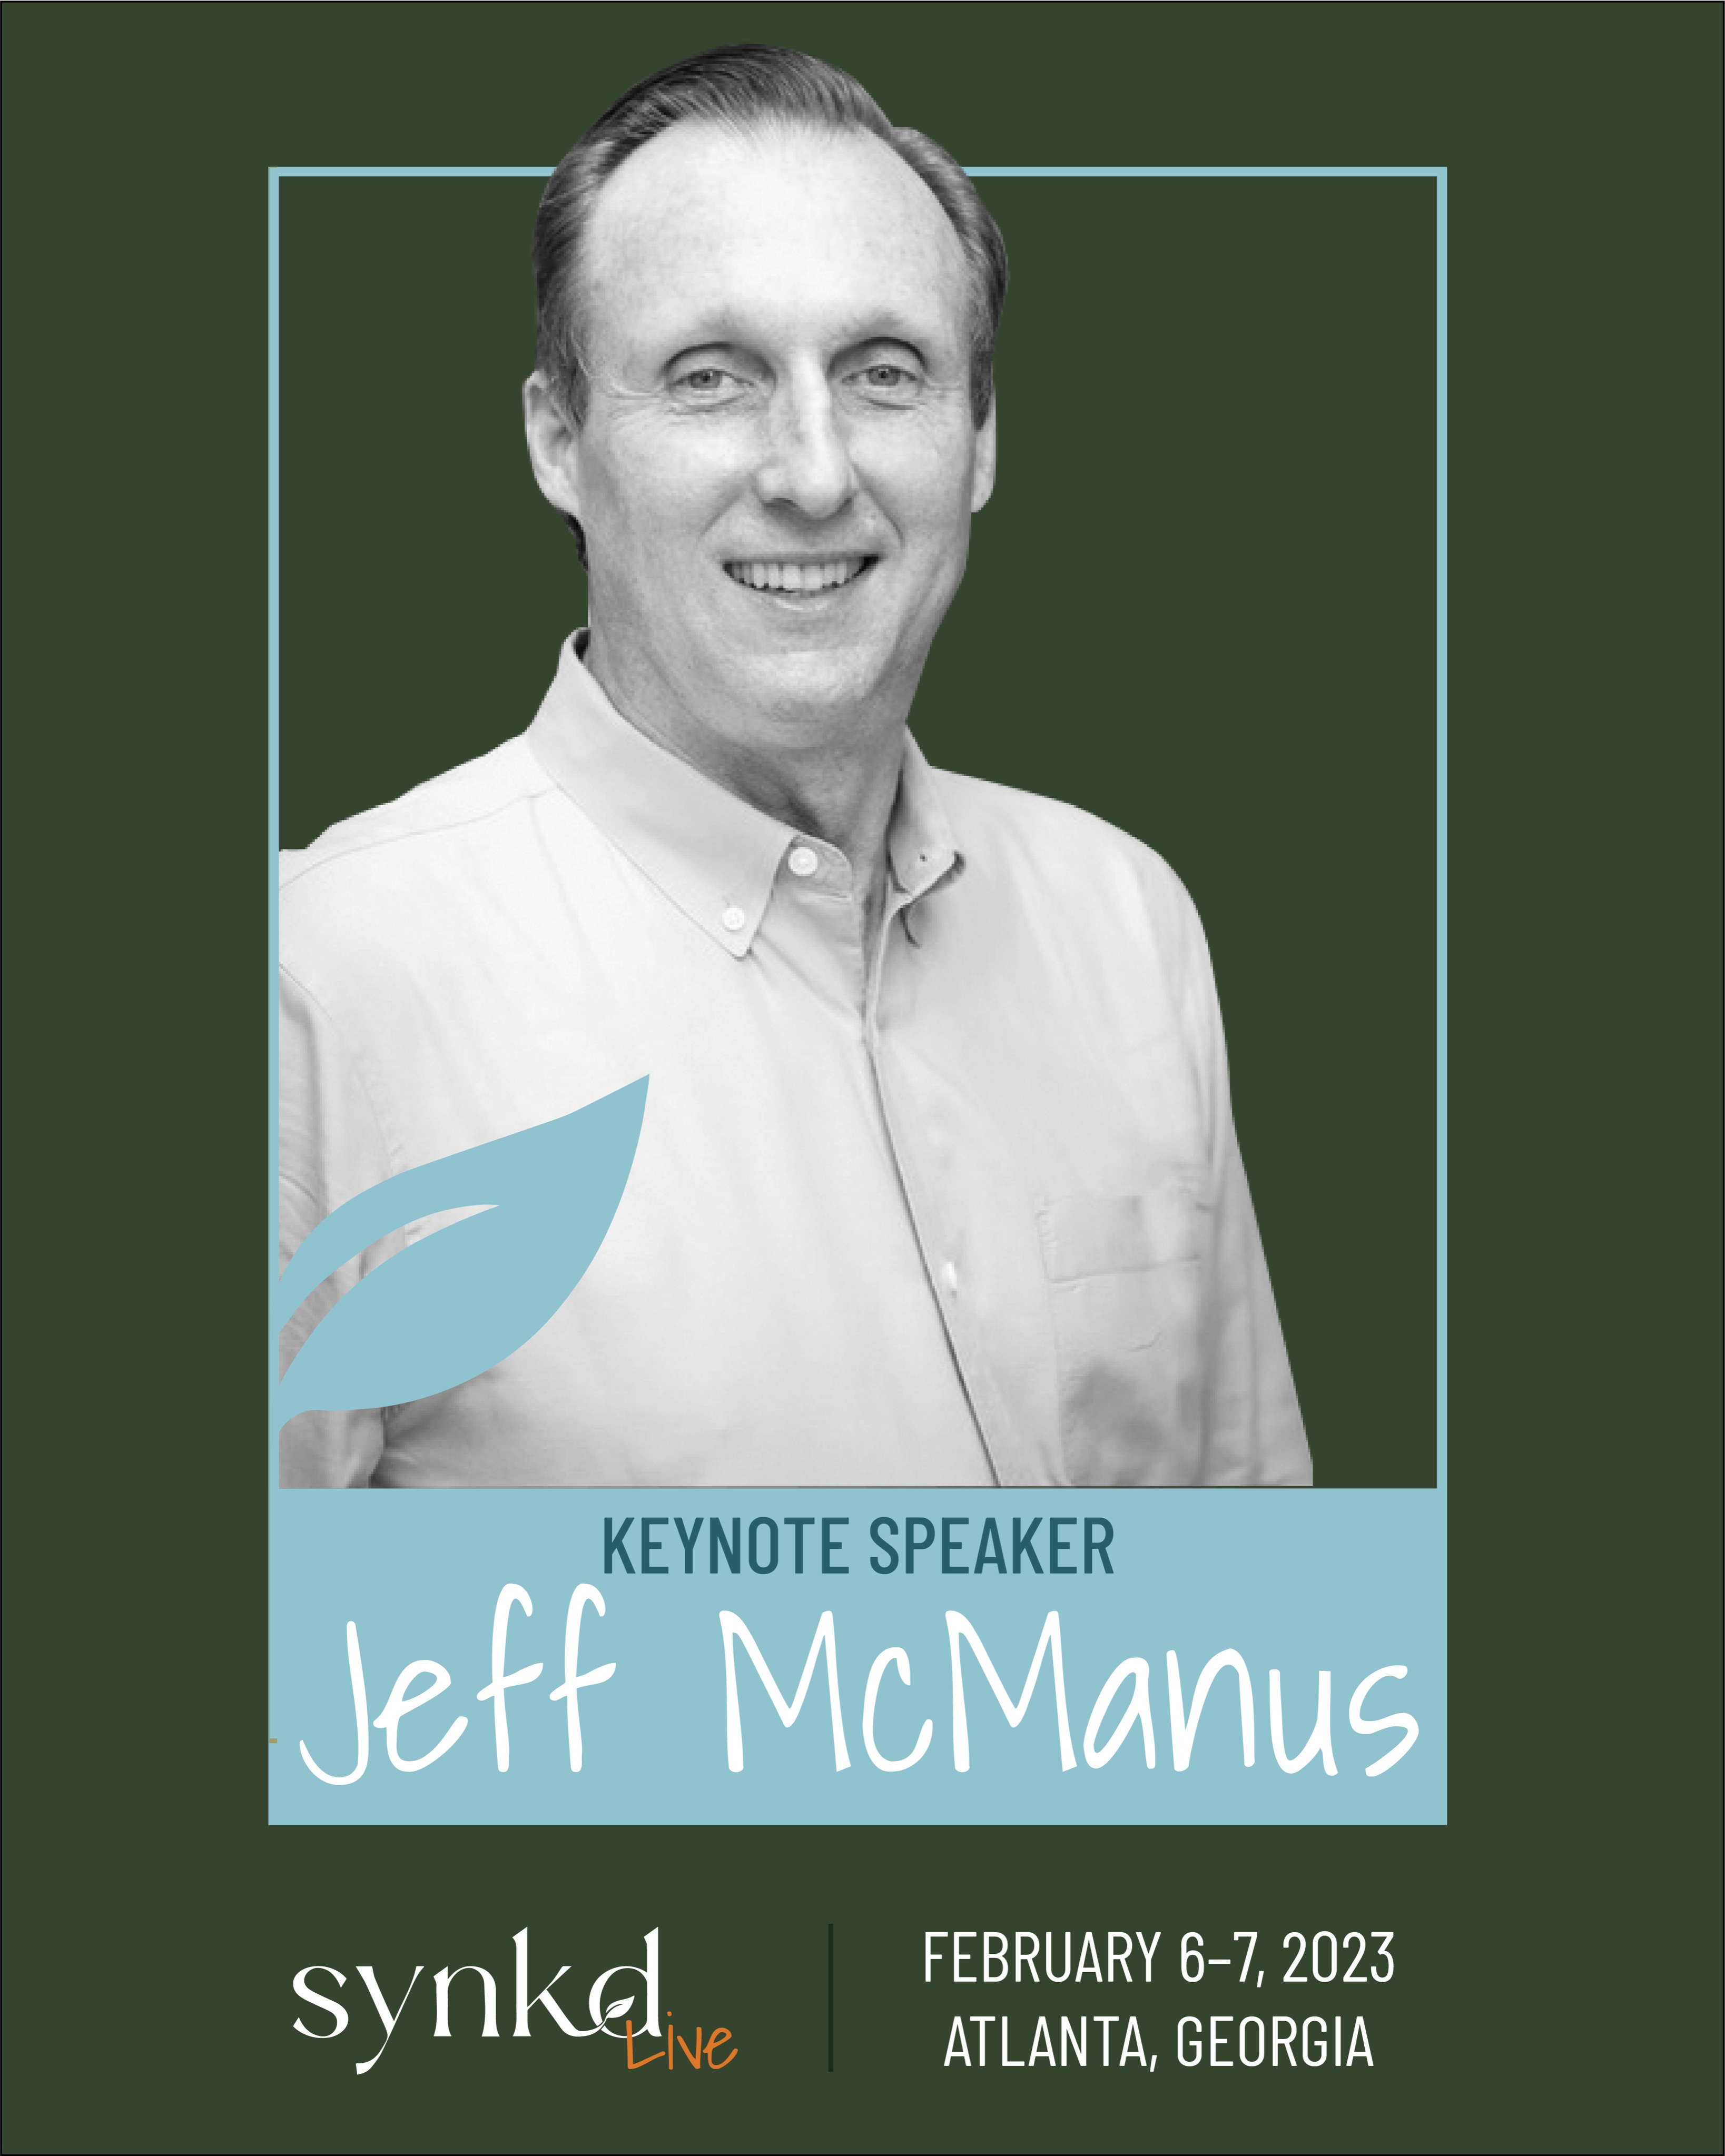 ANNOUNCING OUR KEYNOTE SPEAKER: JEFF MCMANUS